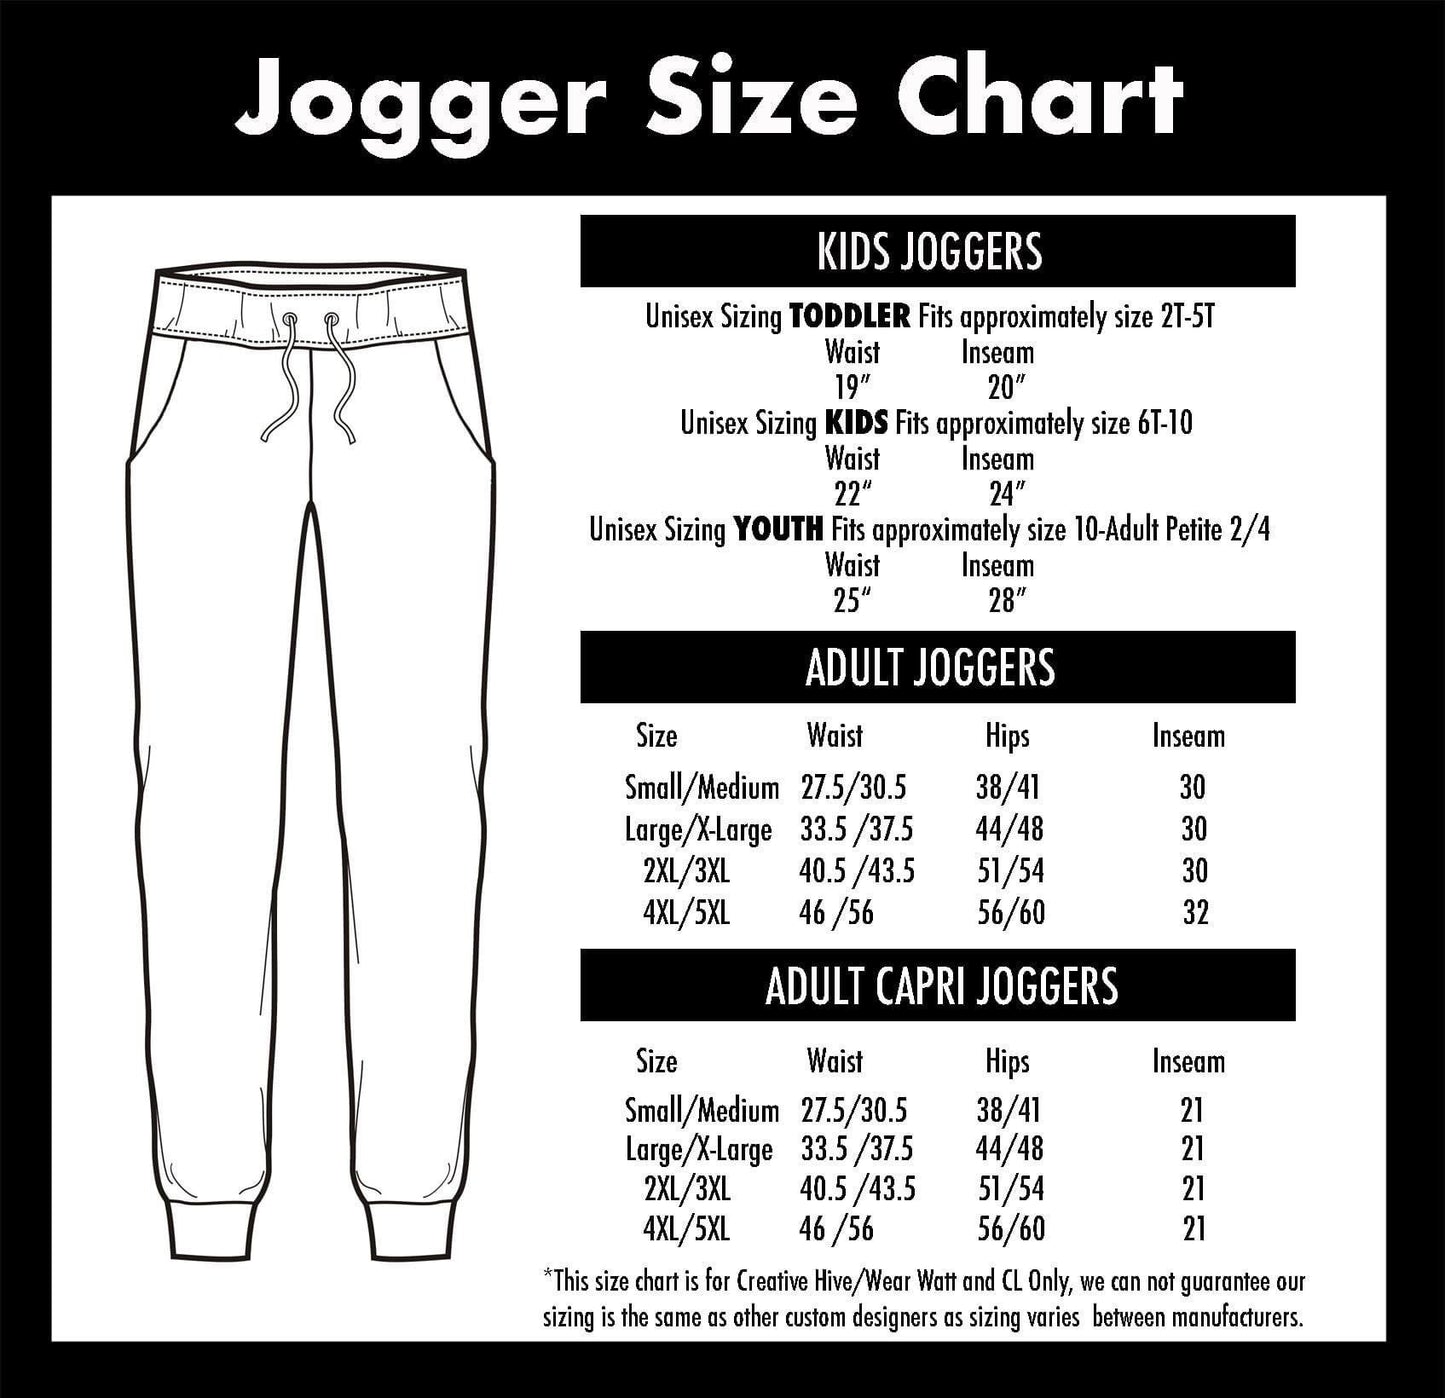 Get Your Kicks - Full Joggers